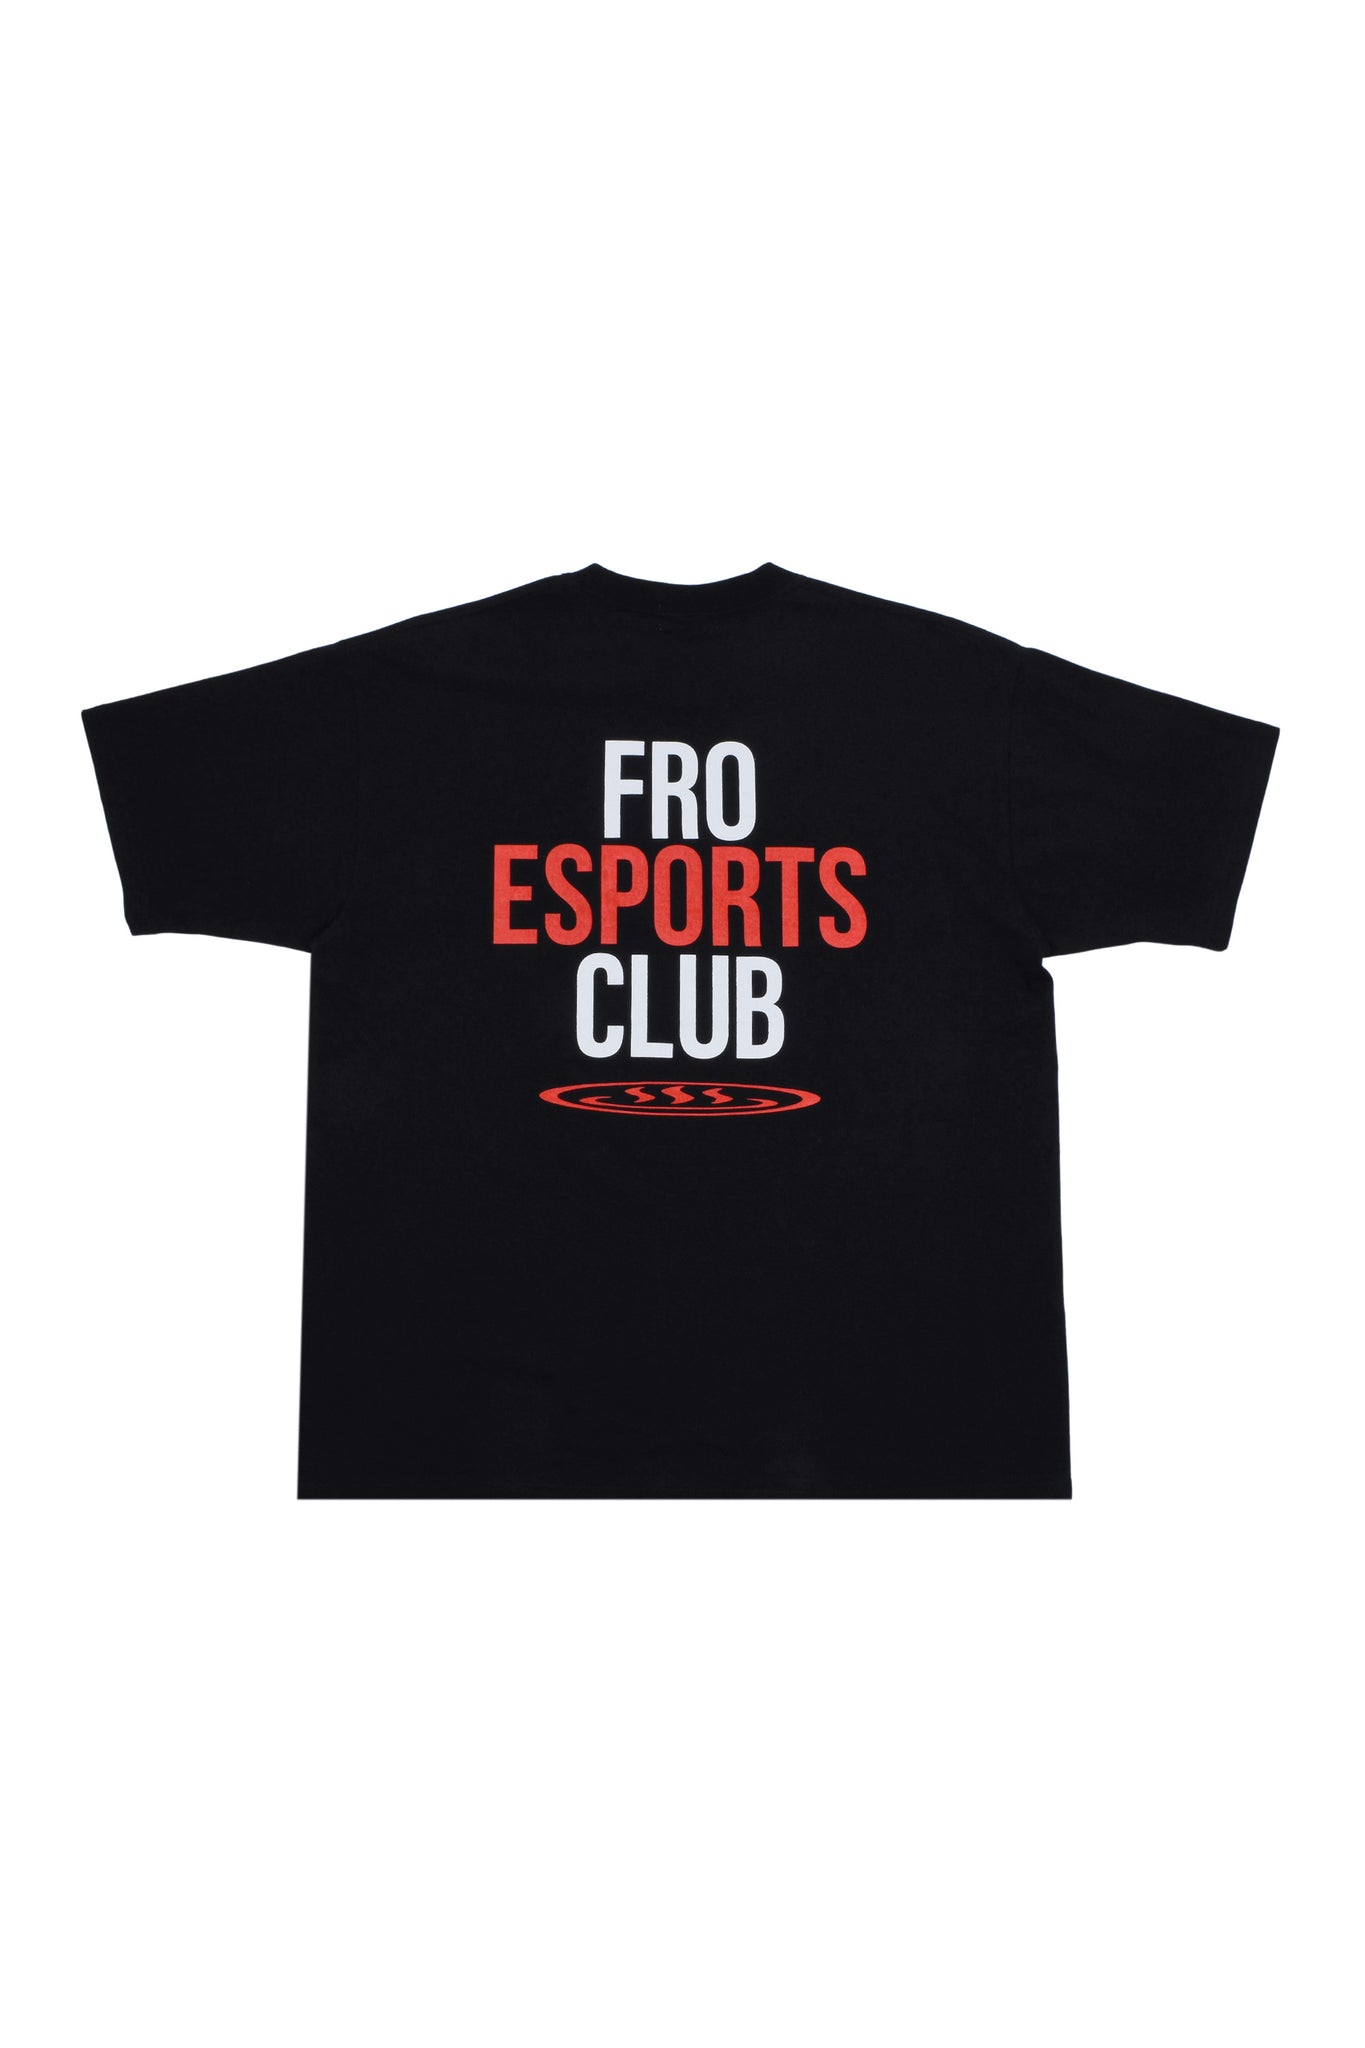 FRO ESPORTS CLUB T-SHIRT BLACK